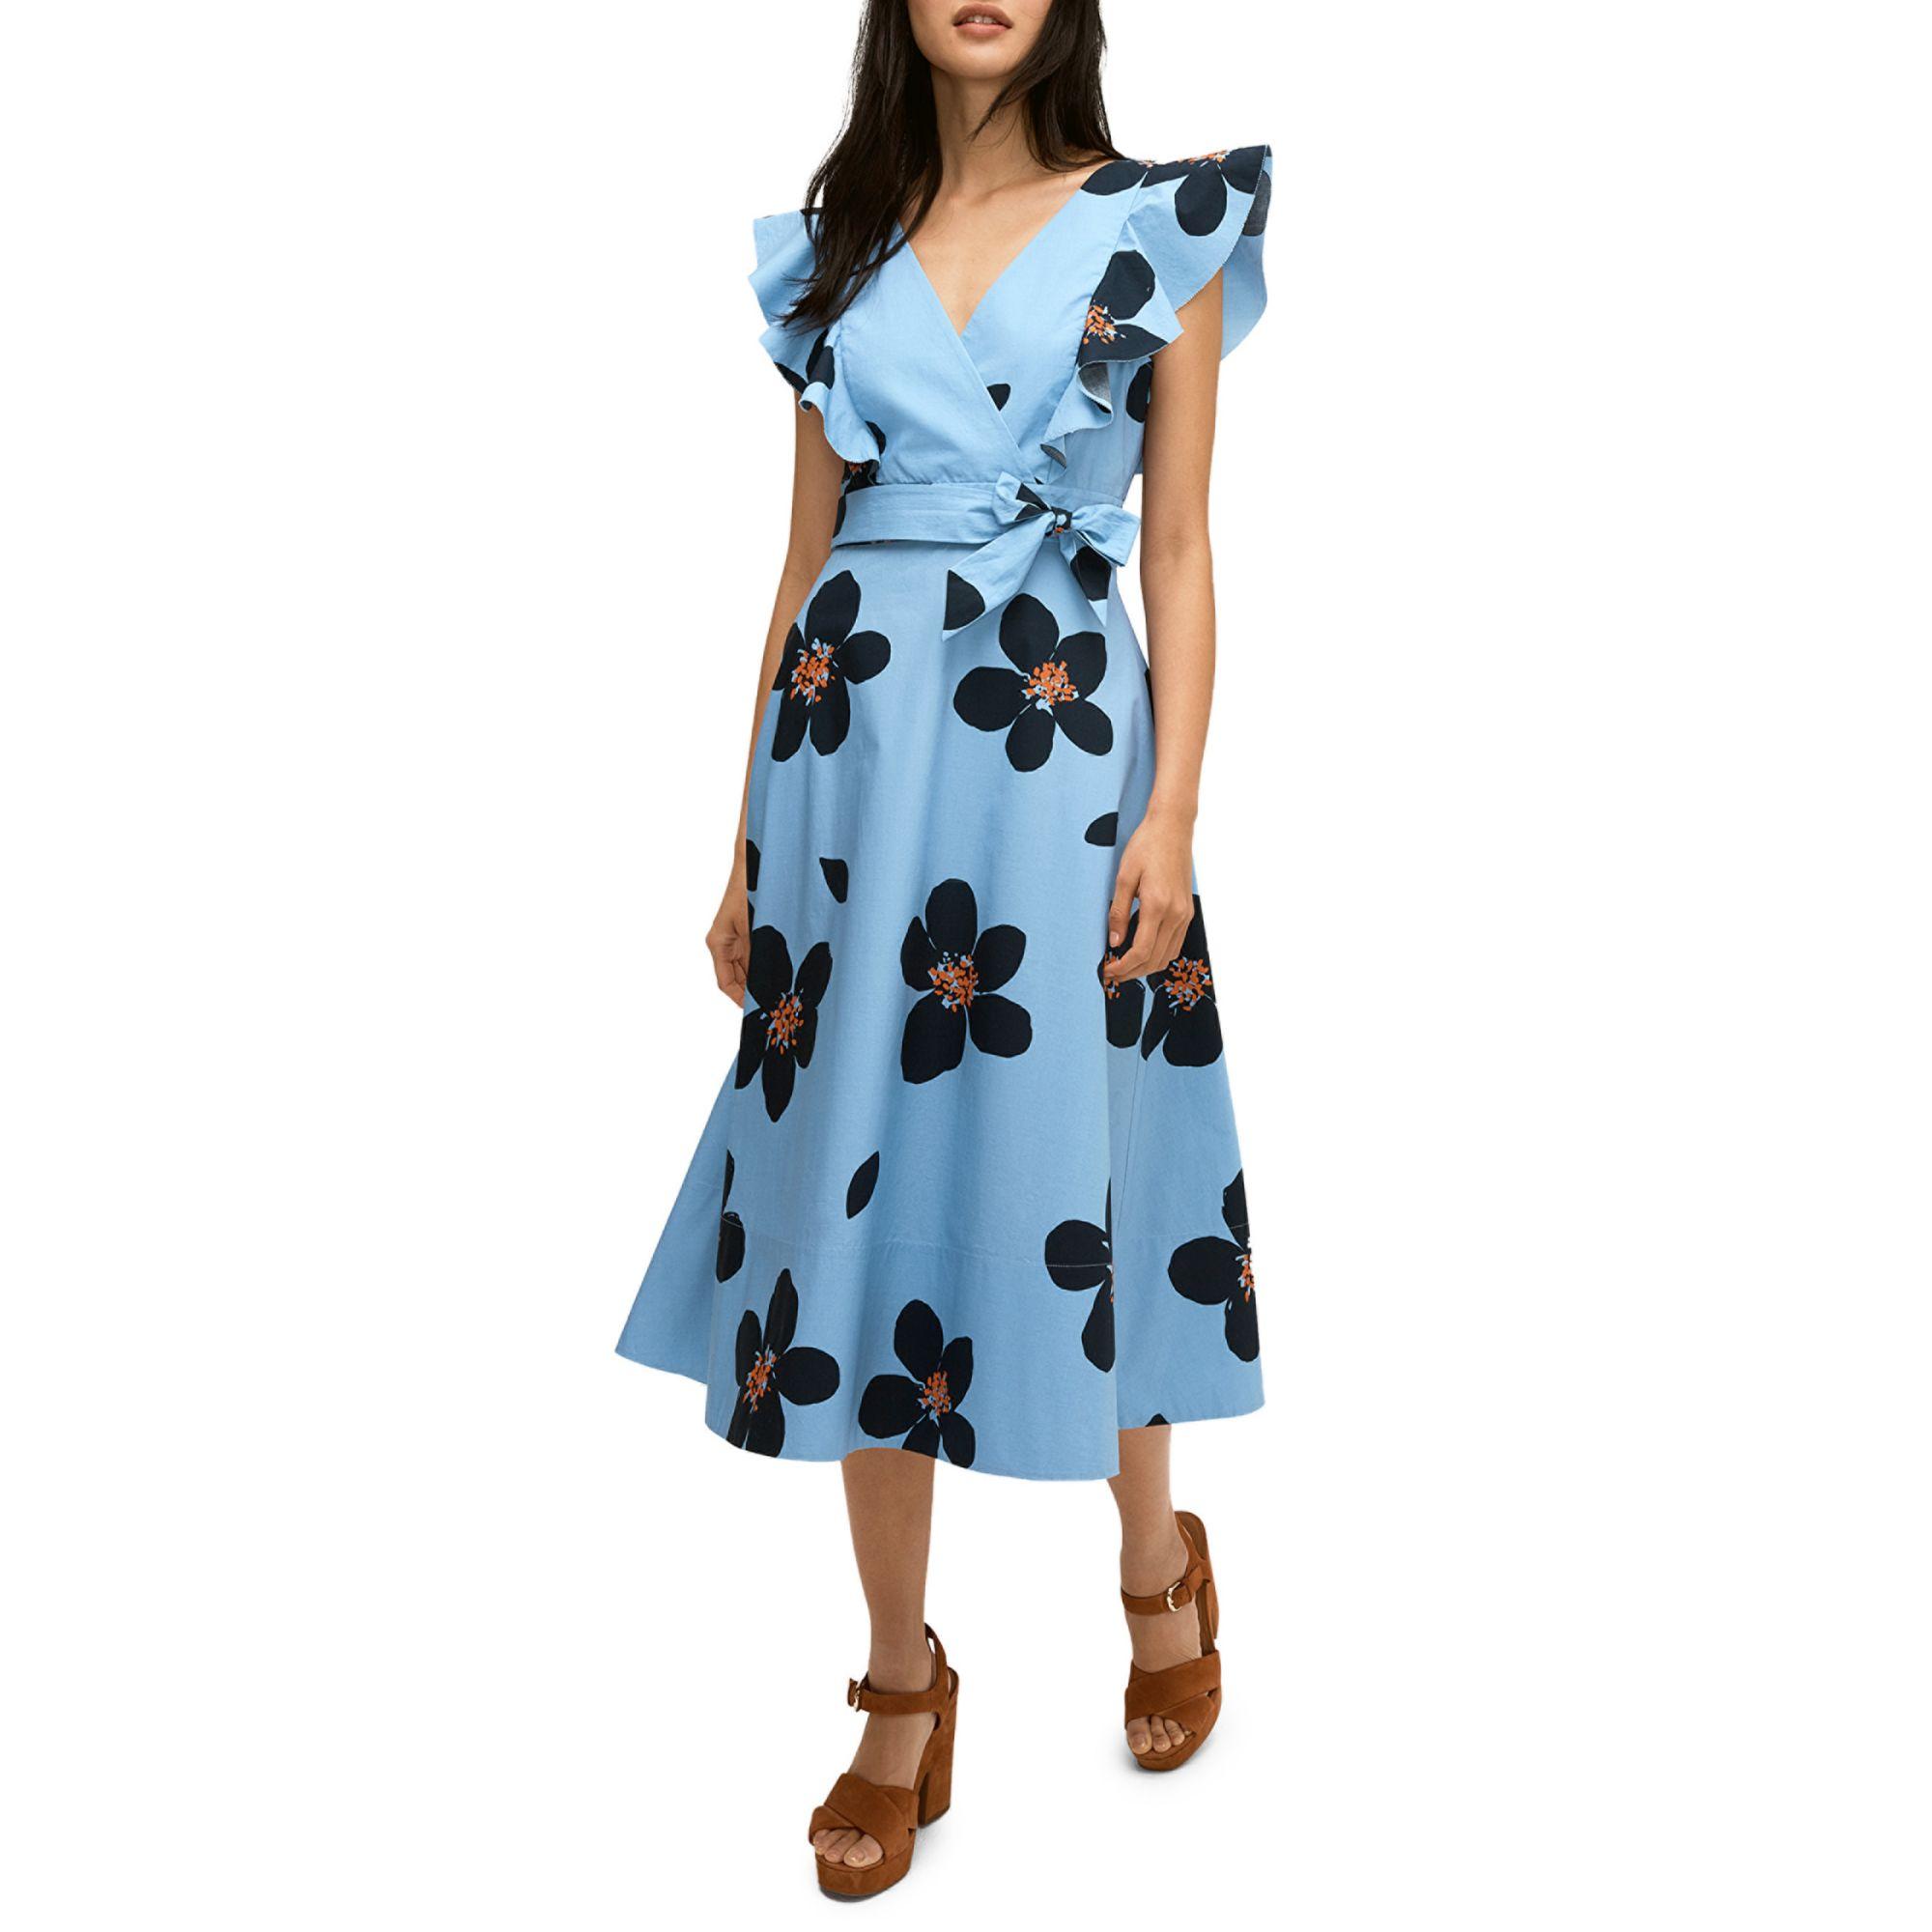 Kate Spade Blue Floral Dress